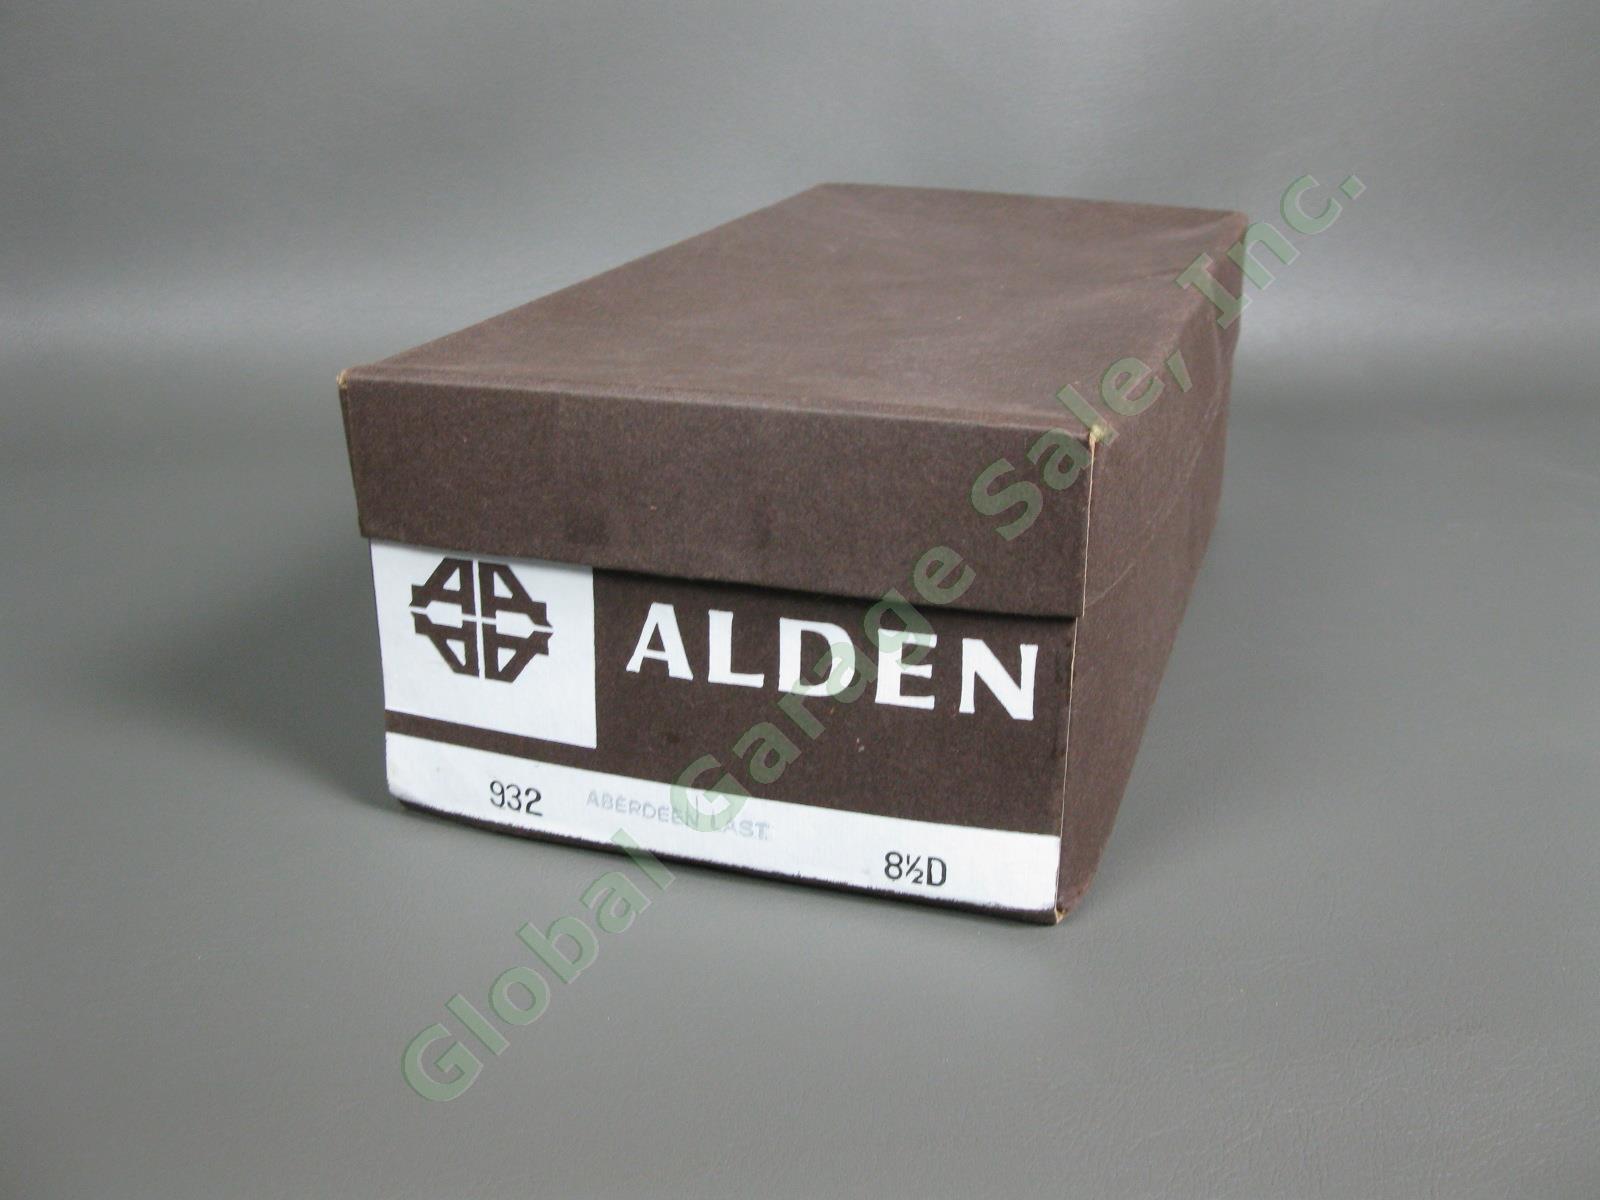 Alden 932 Aberdeen Last Black Leather Cap Toe Straight Tip Dress Shoe Mens 8.5D 6